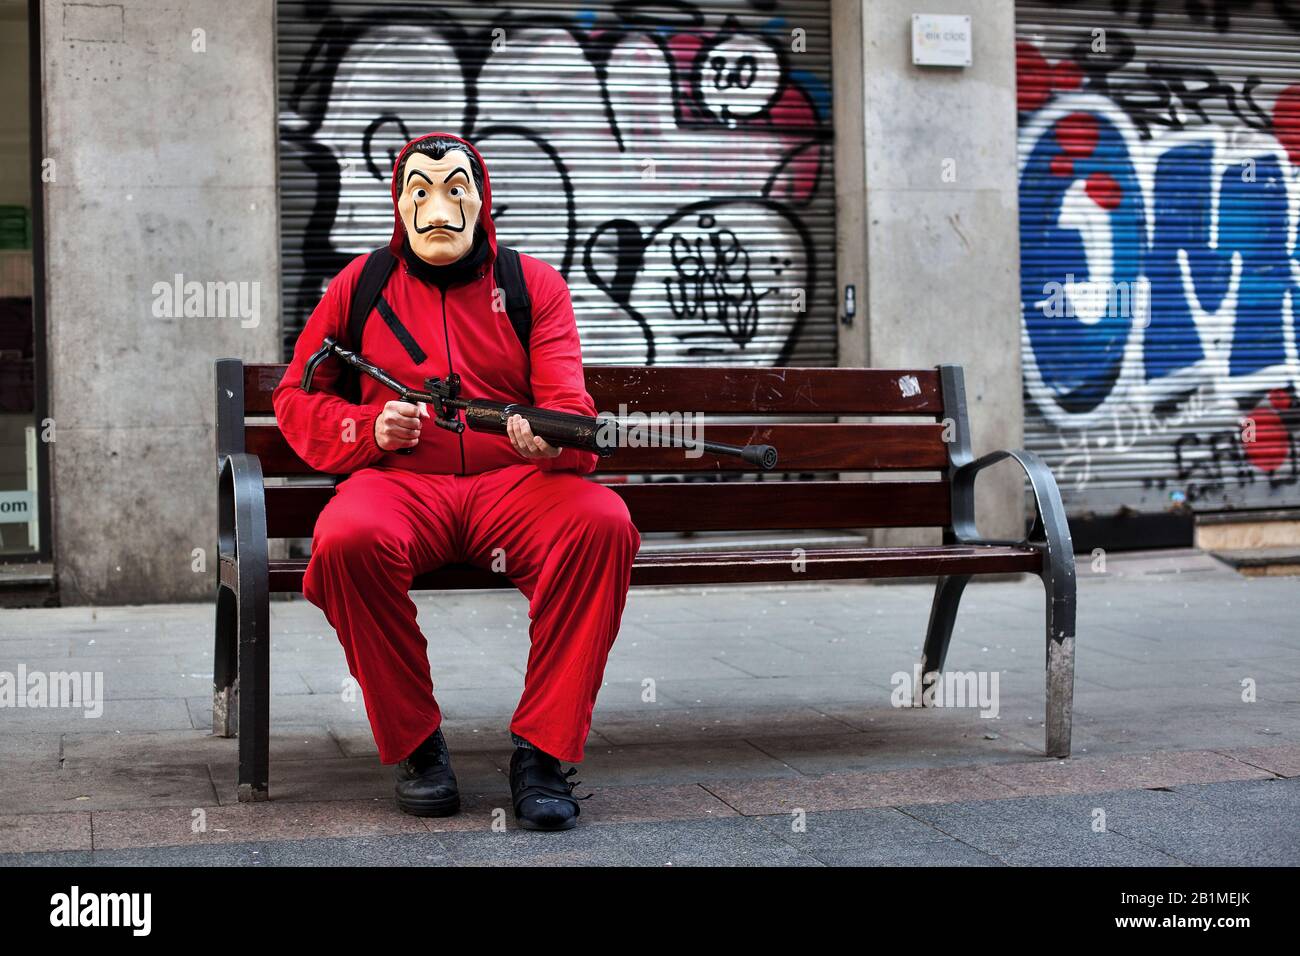 Man dressed as in 'Money heist' costume for carnival, Barcelona, Spain. Stock Photo